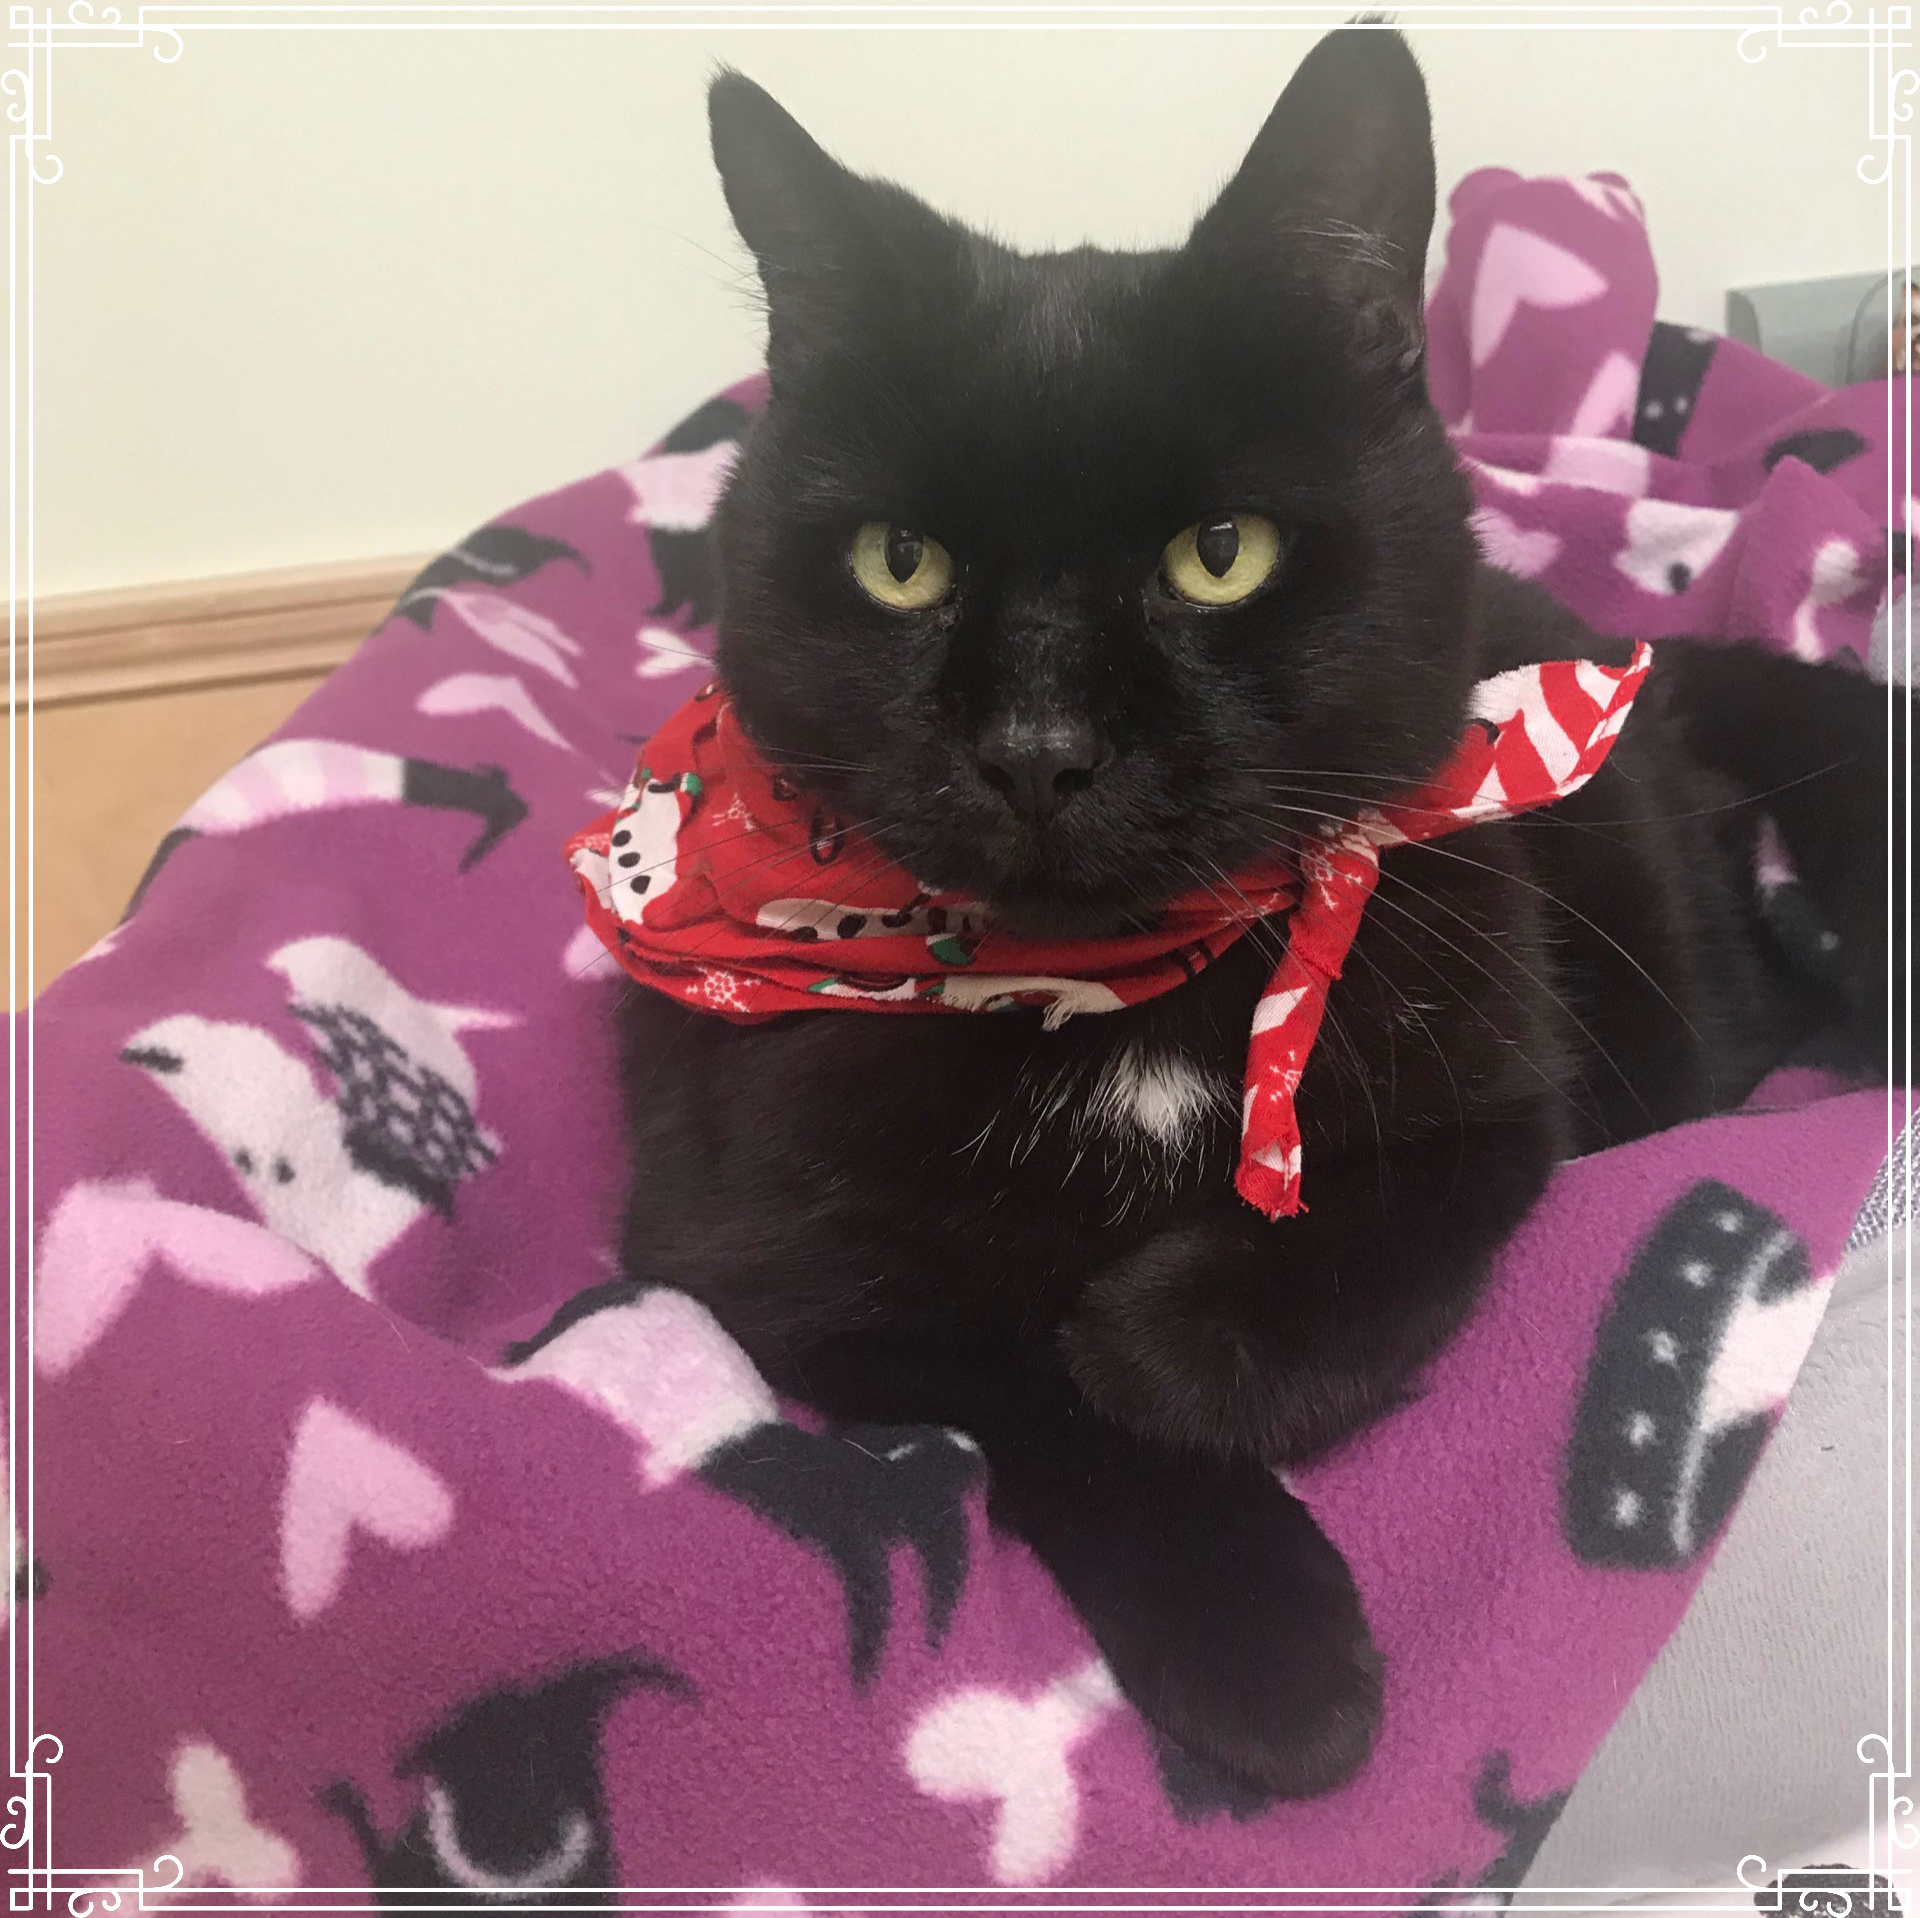 black cat with red bandana sitting on purple print blanket